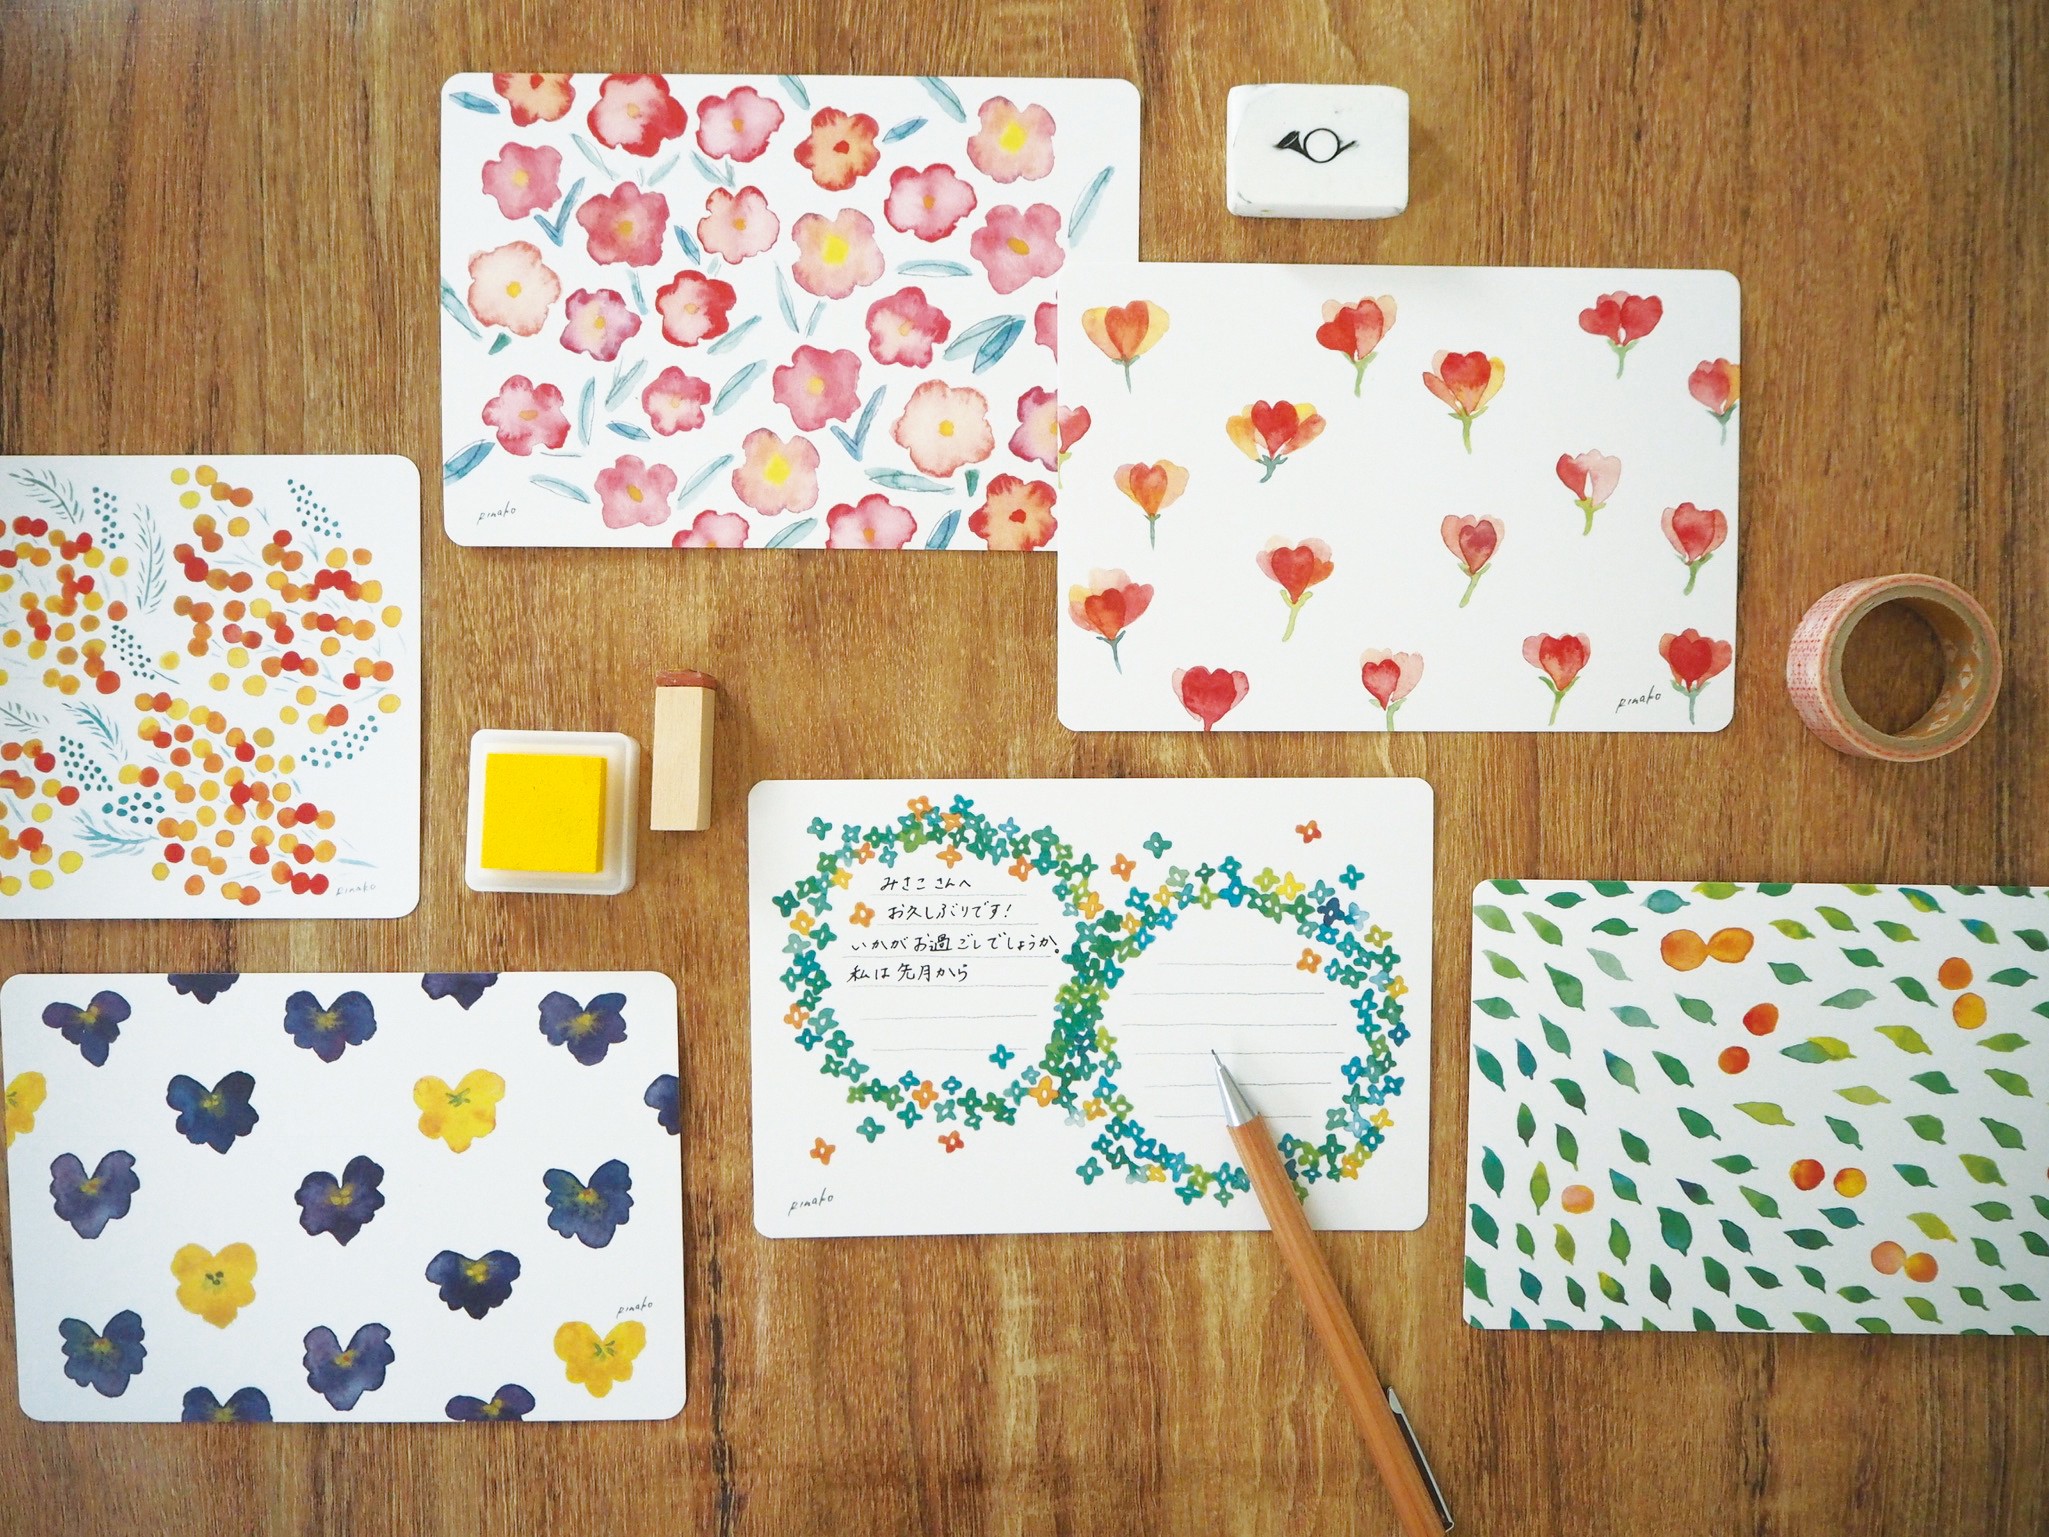 Rmade 花の水彩画 ポストカードセット Iichi ハンドメイド クラフト作品 手仕事品の通販